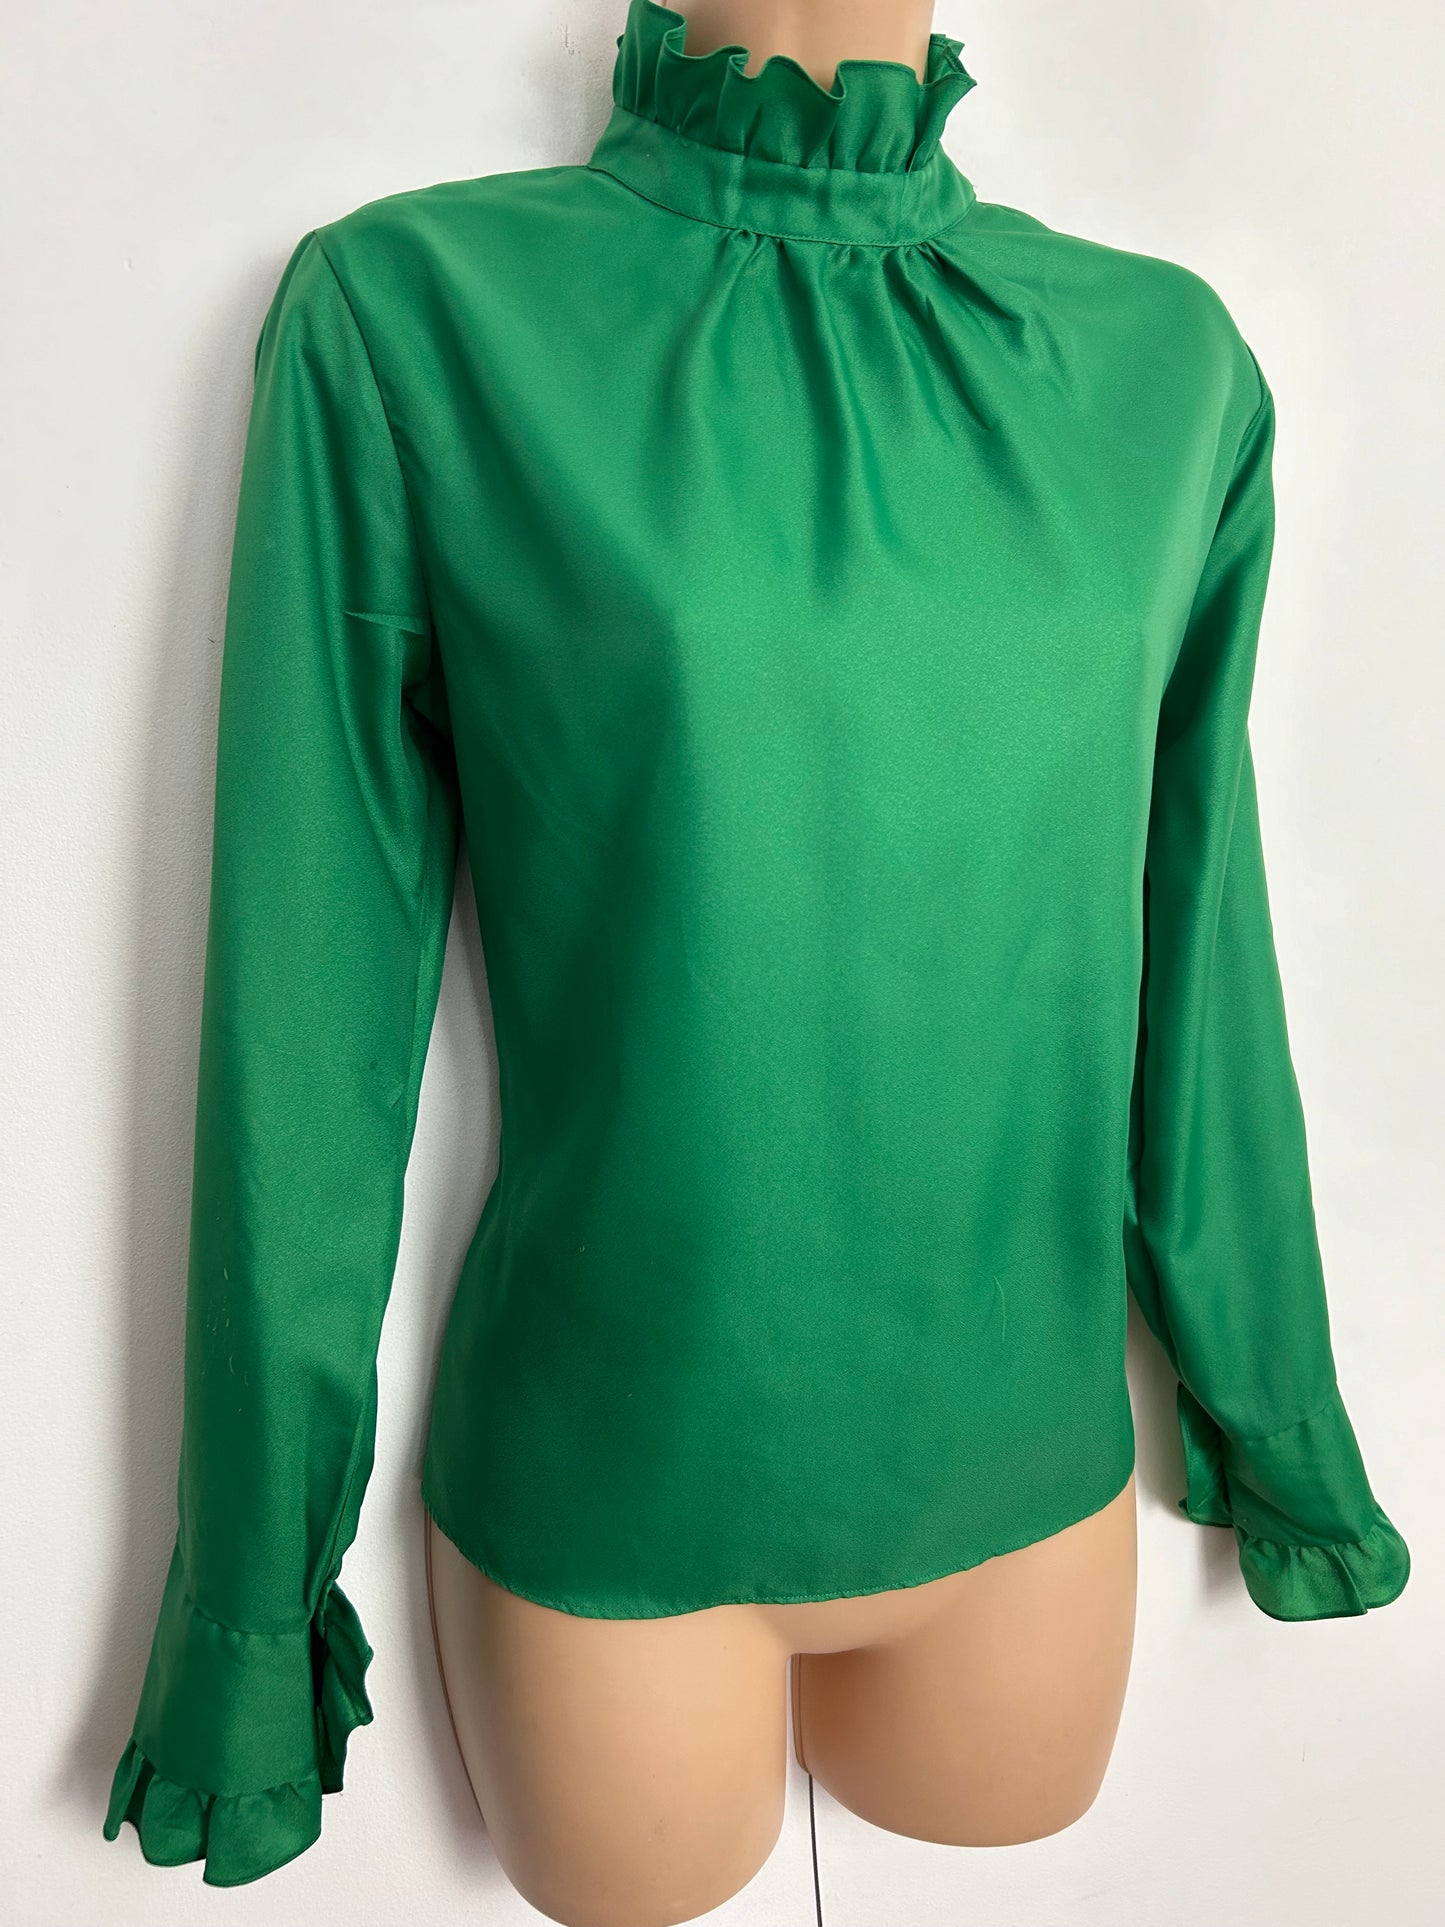 Vintage 1970s UK Size 12 Emerald Green Pie Crust Collar Long Sleeve Blouse